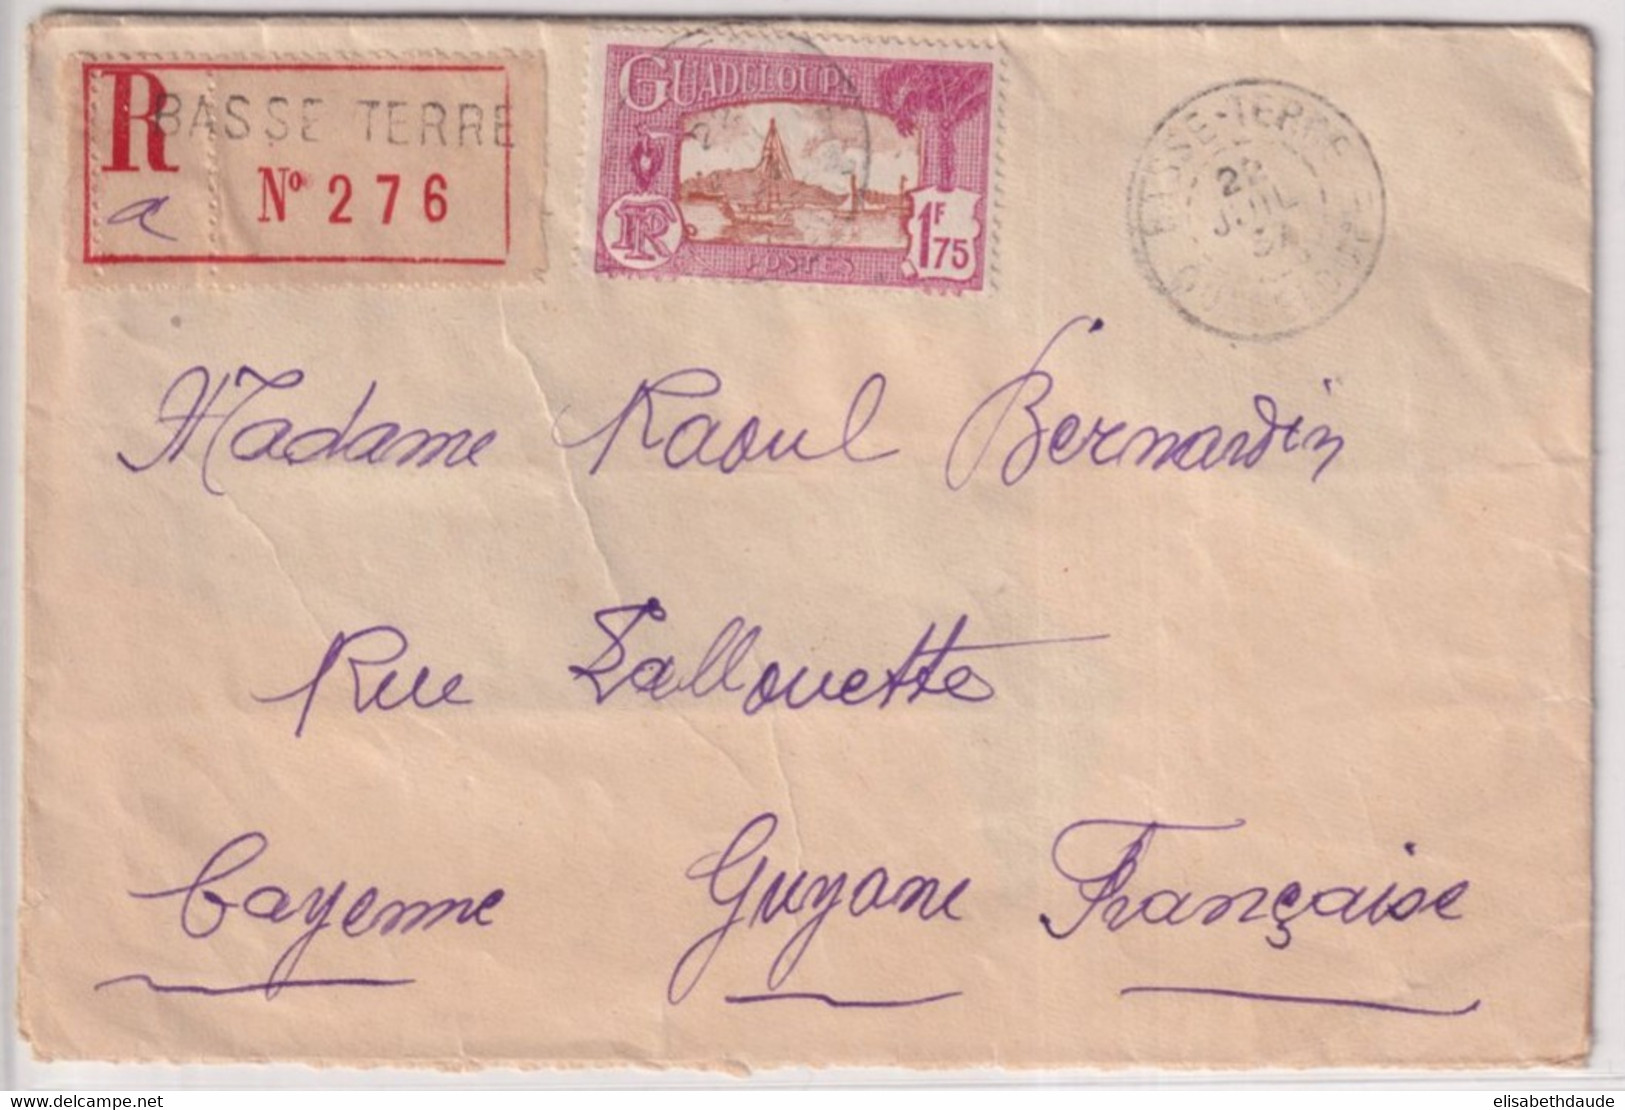 GUADELOUPE - 1937 - 1.75 RARE SEUL Sur LETTRE (COTE DALLAY = 120 EUR) RECOMMANDEE De BASSE TERRE => CAYENNE (GUYANE) ! - Storia Postale